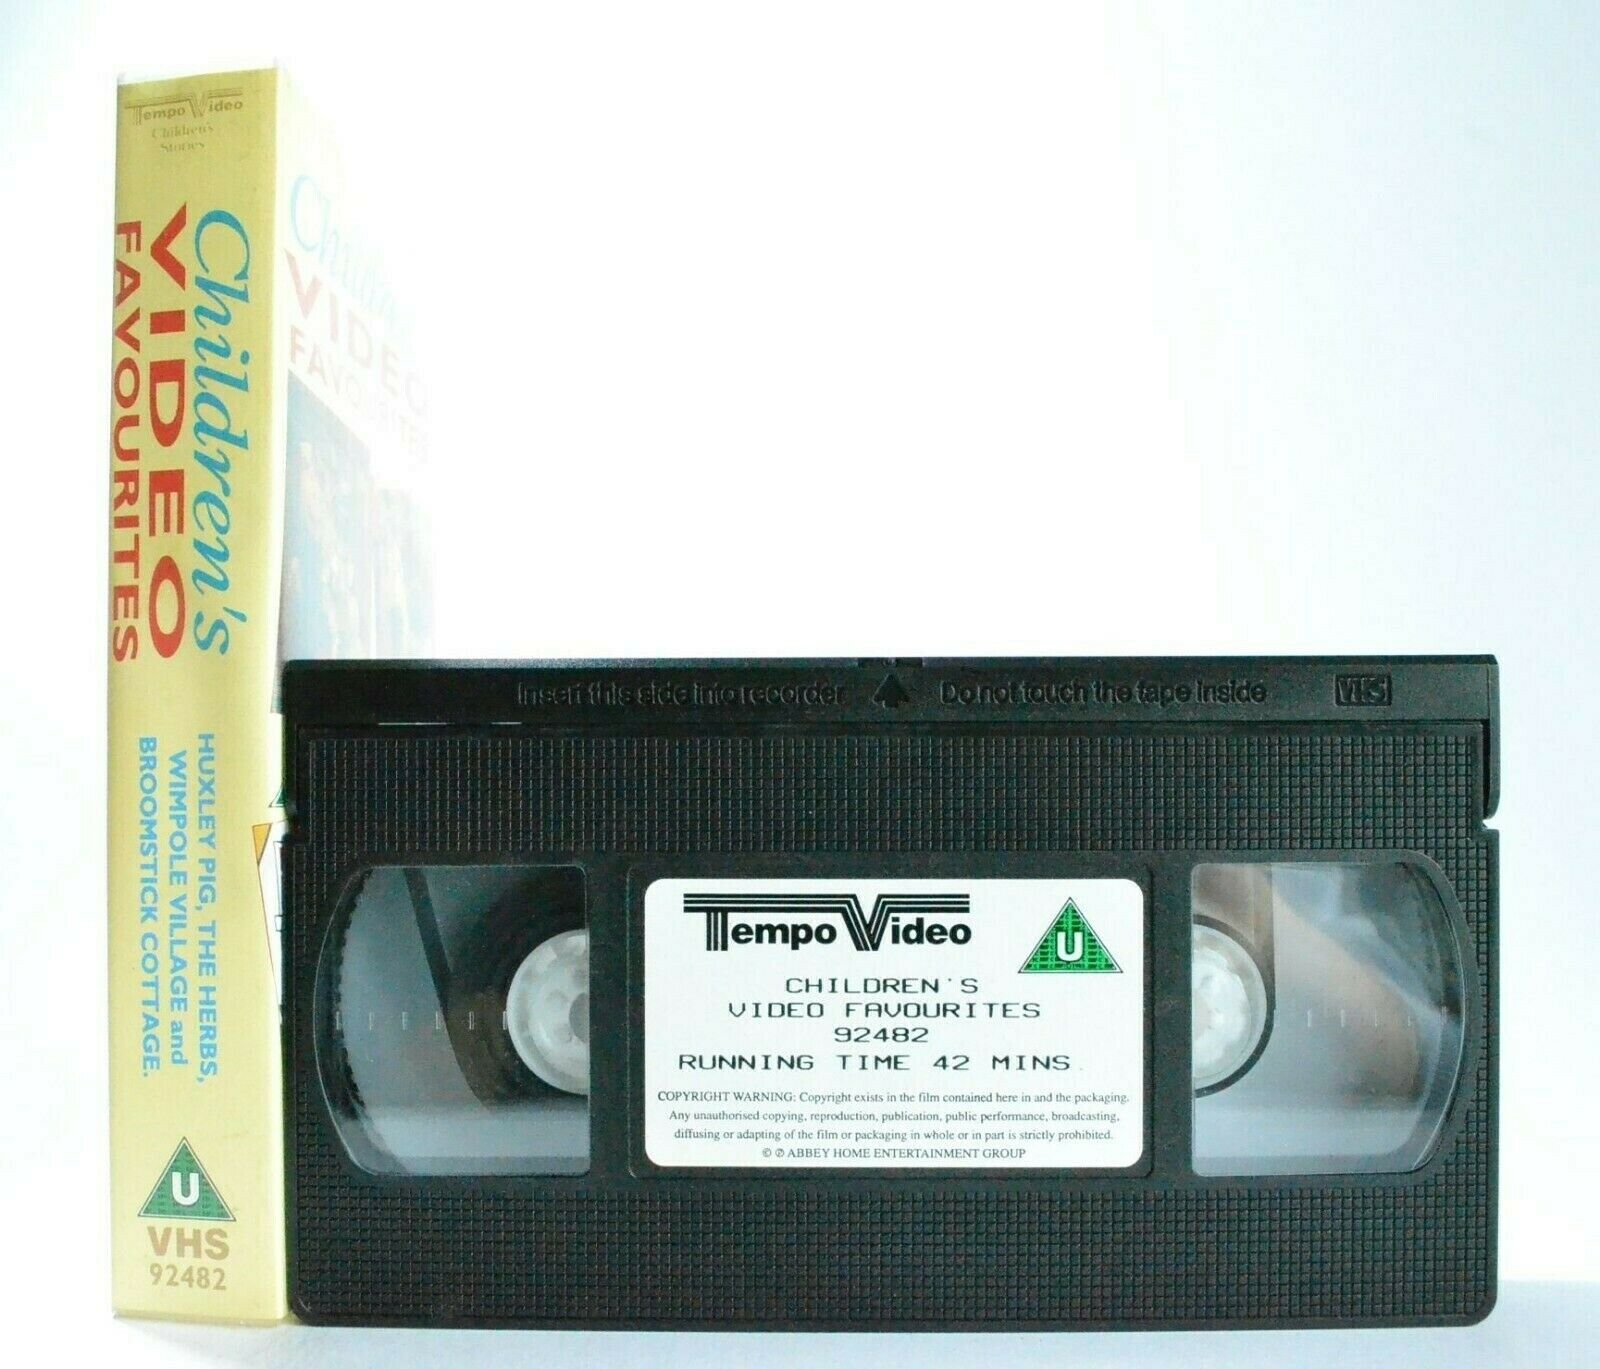 Children's Video Favourites: Huxley, Wimpole Village, Broomstick Cottage - VHS-